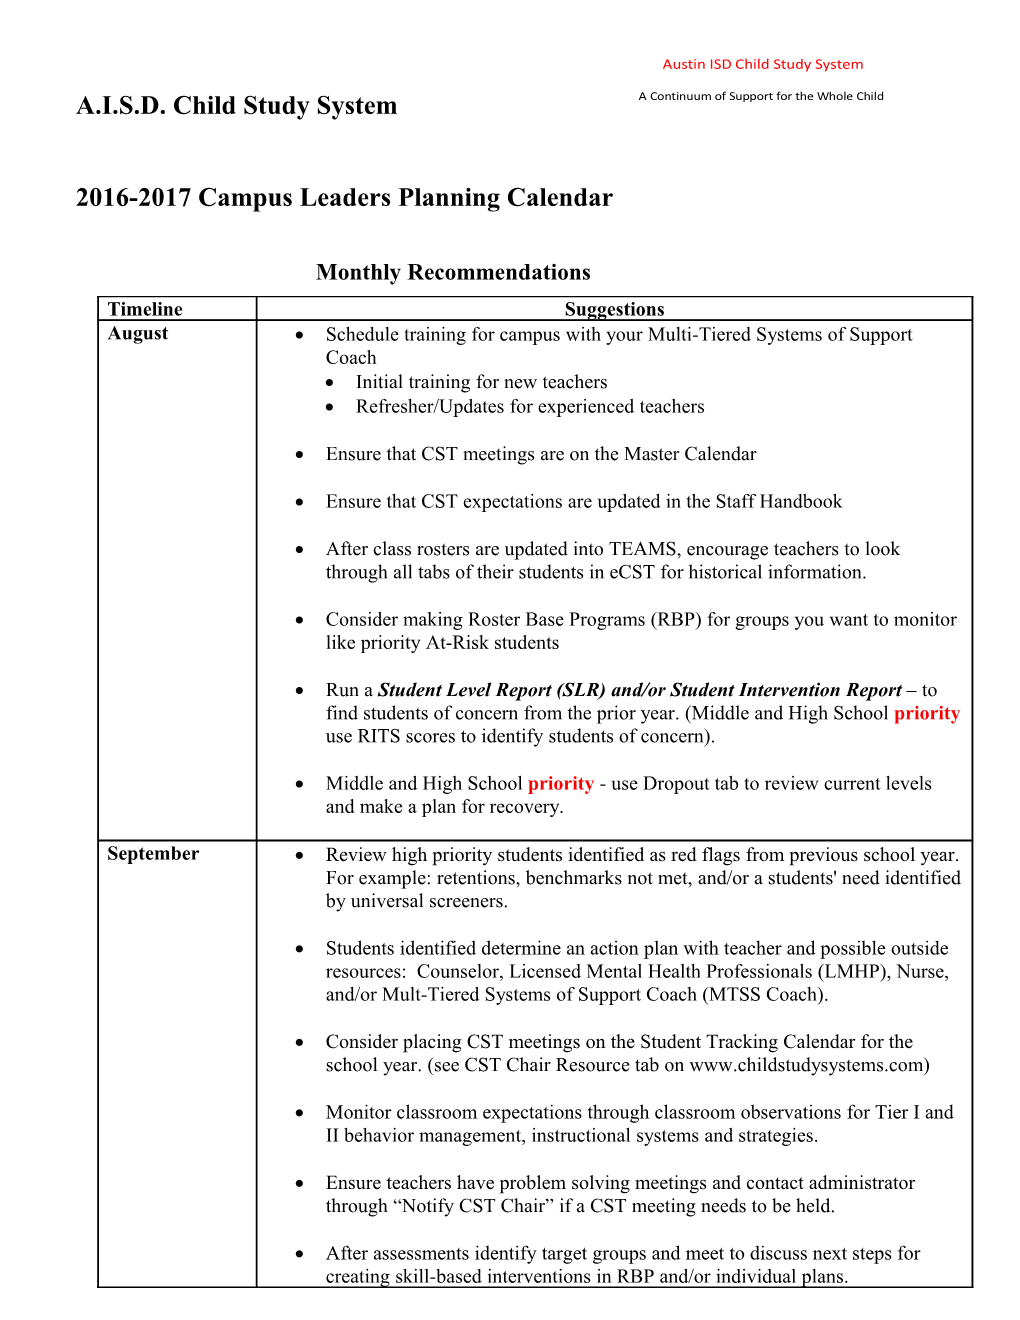 PBS 2008-09 Campus Planning Calendar